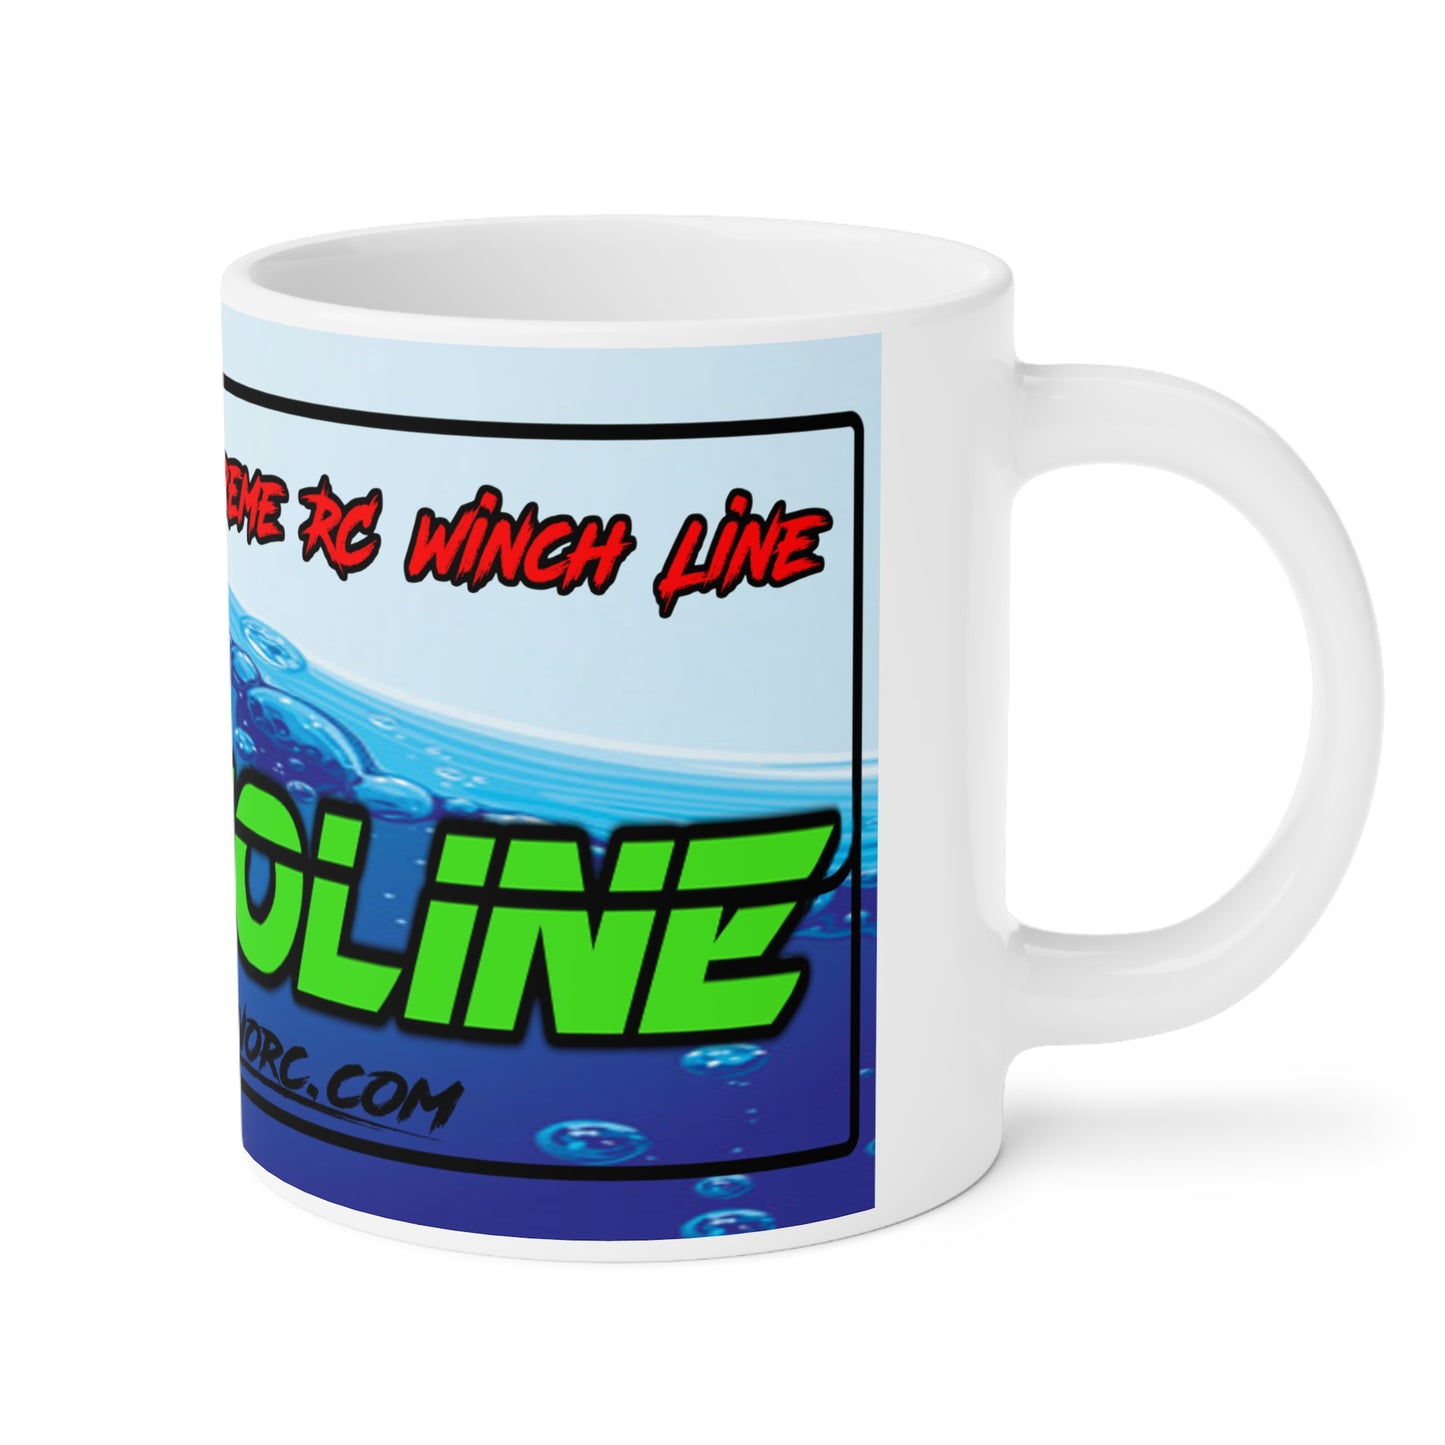 Dinoline Ceramic Mugs 20oz